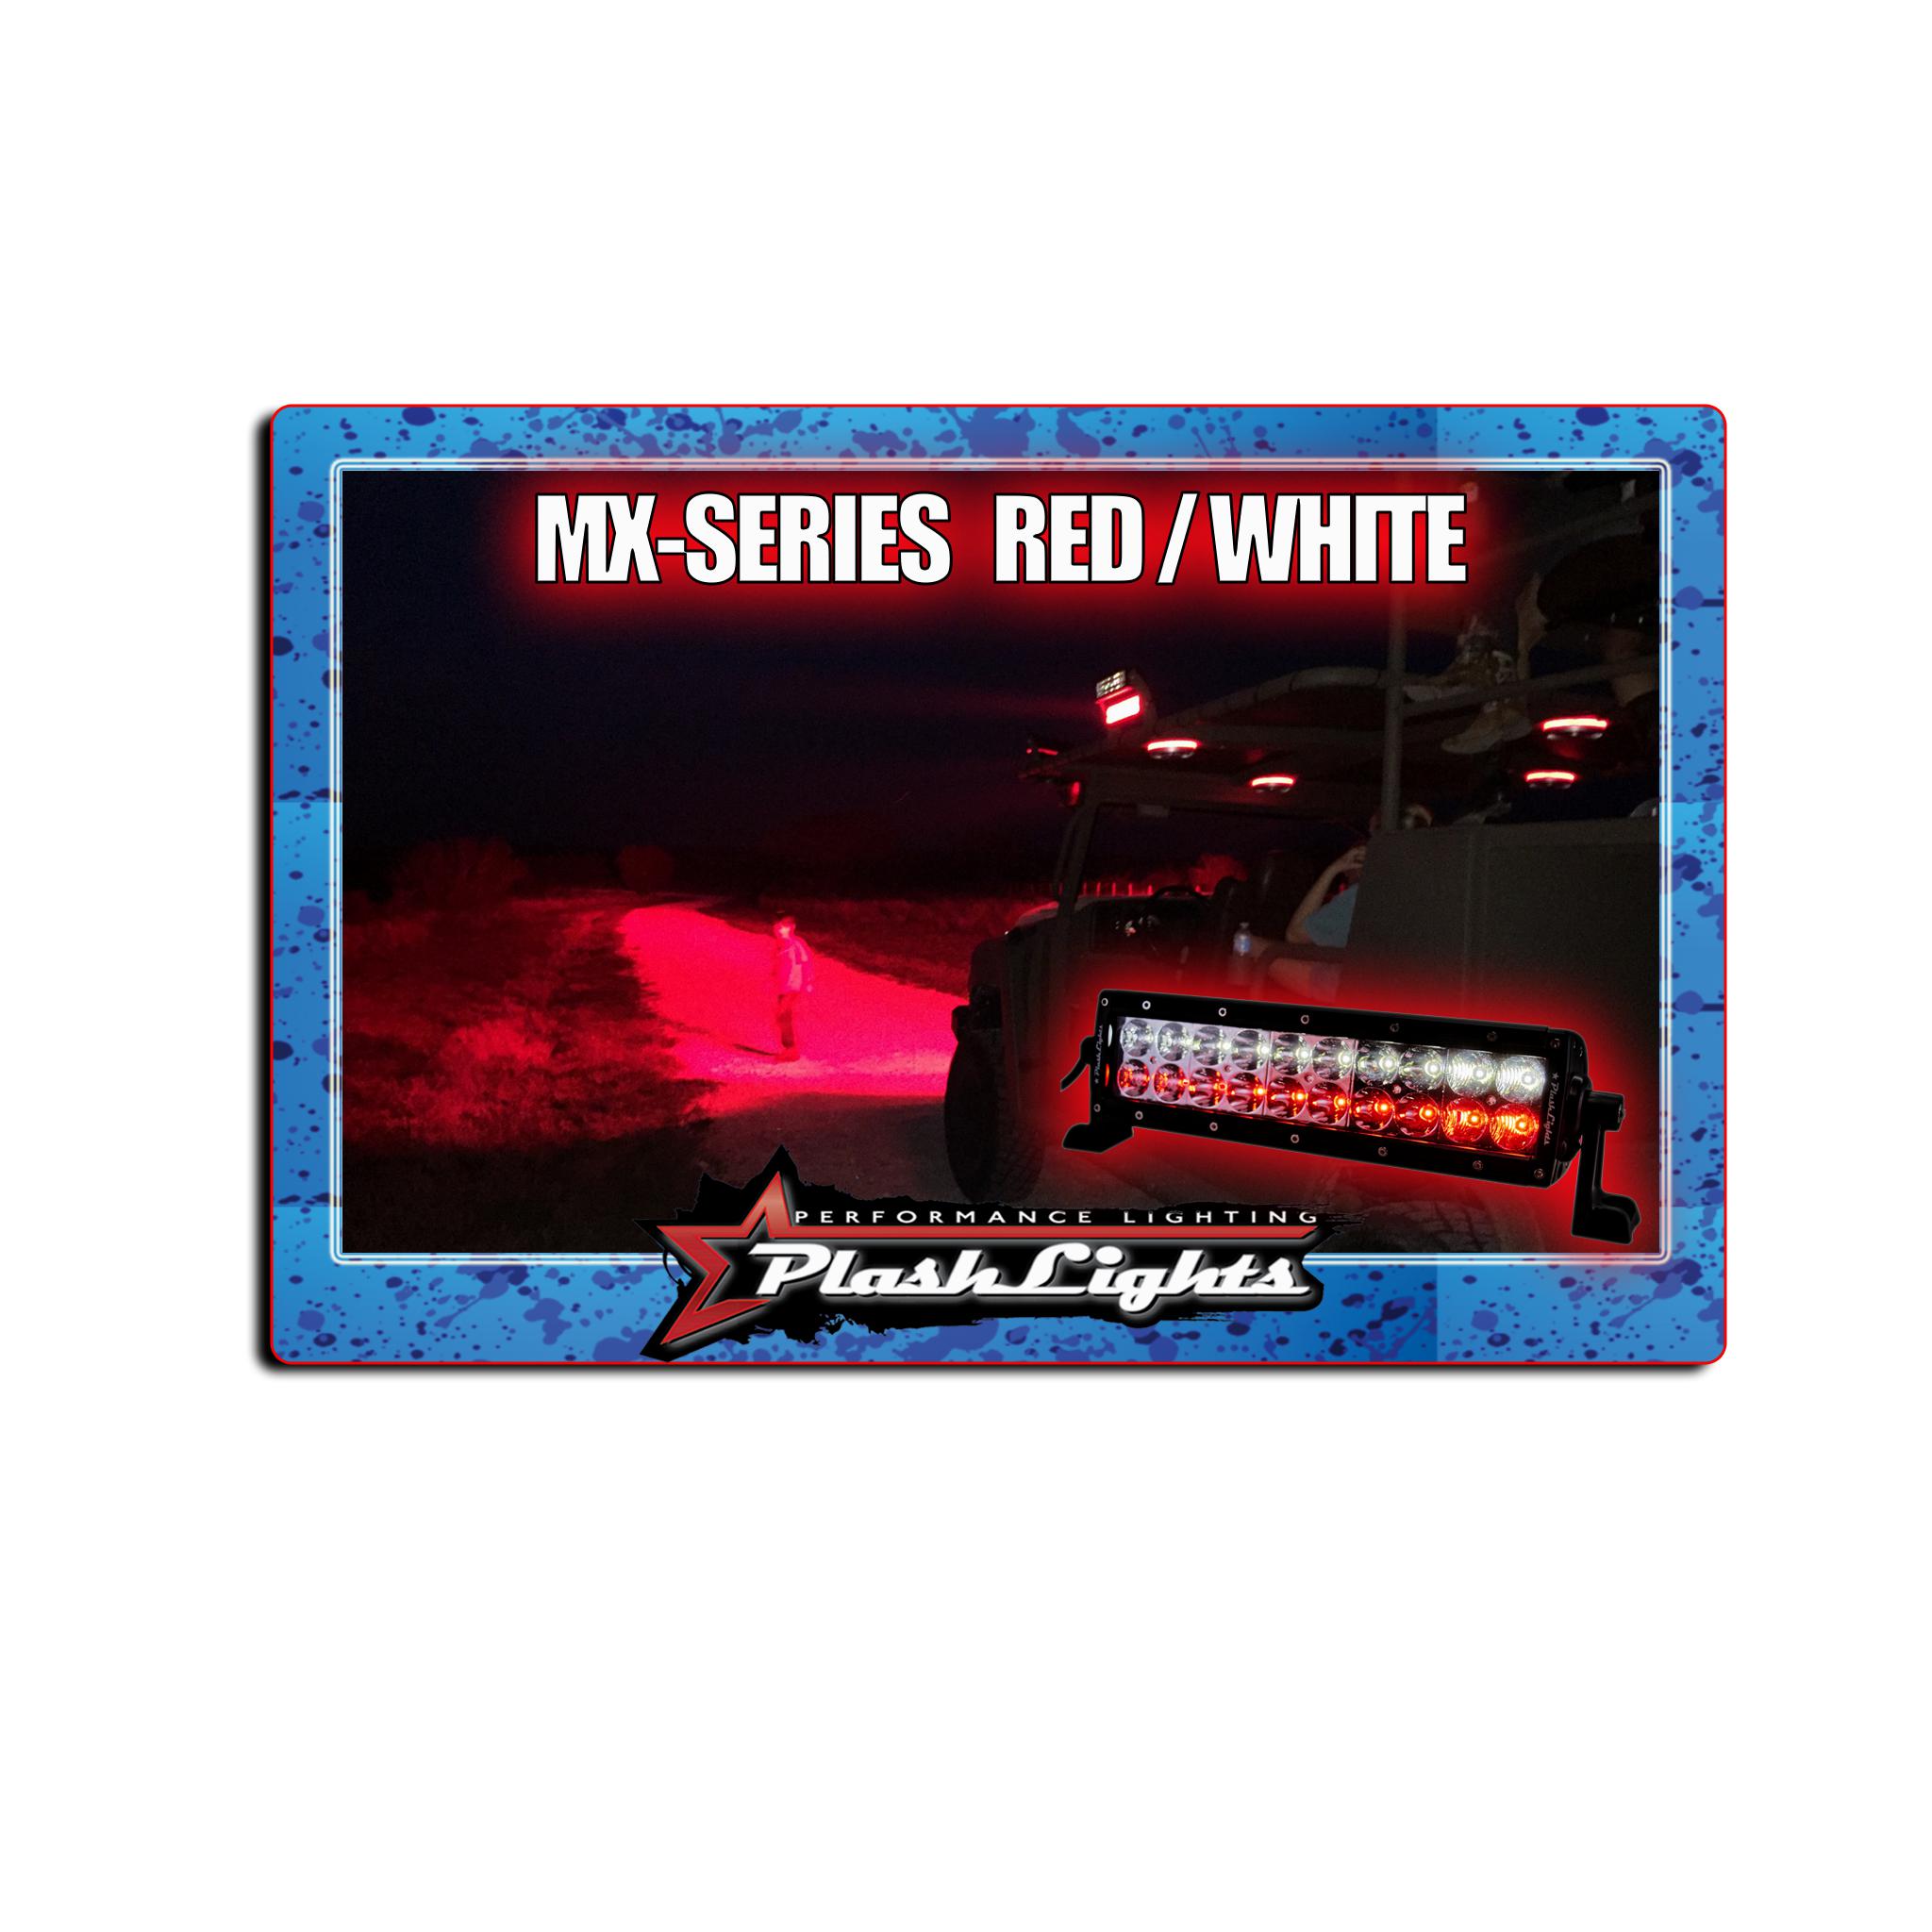 PlashLights Dual Color LED Hunting Light Bar RED WHITE Color Night Vision Stealth predator hunt kill